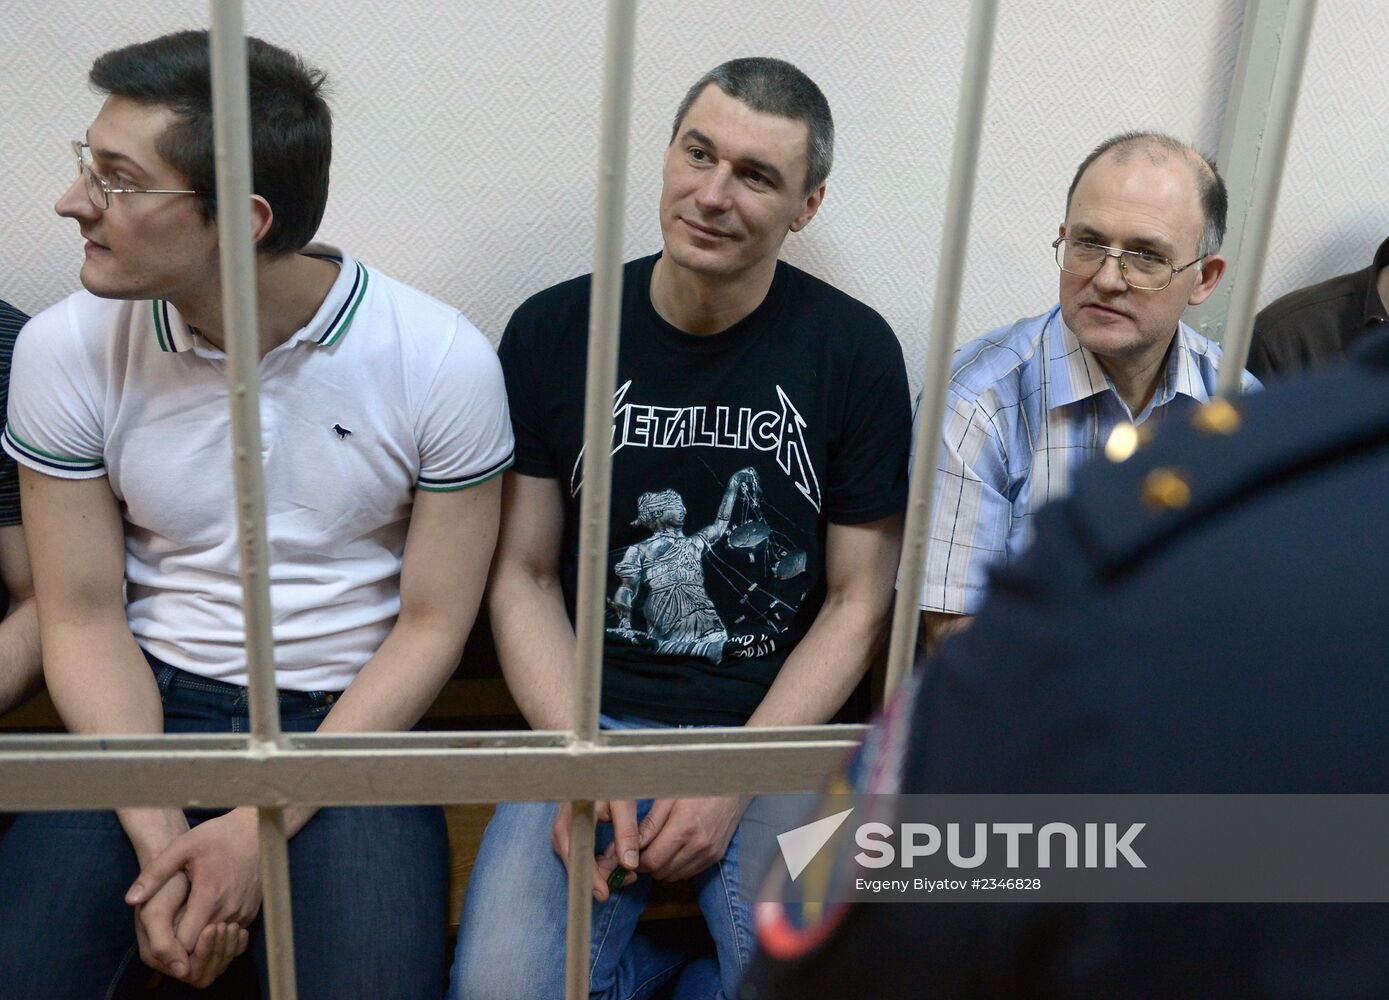 Bolotnaya case trial